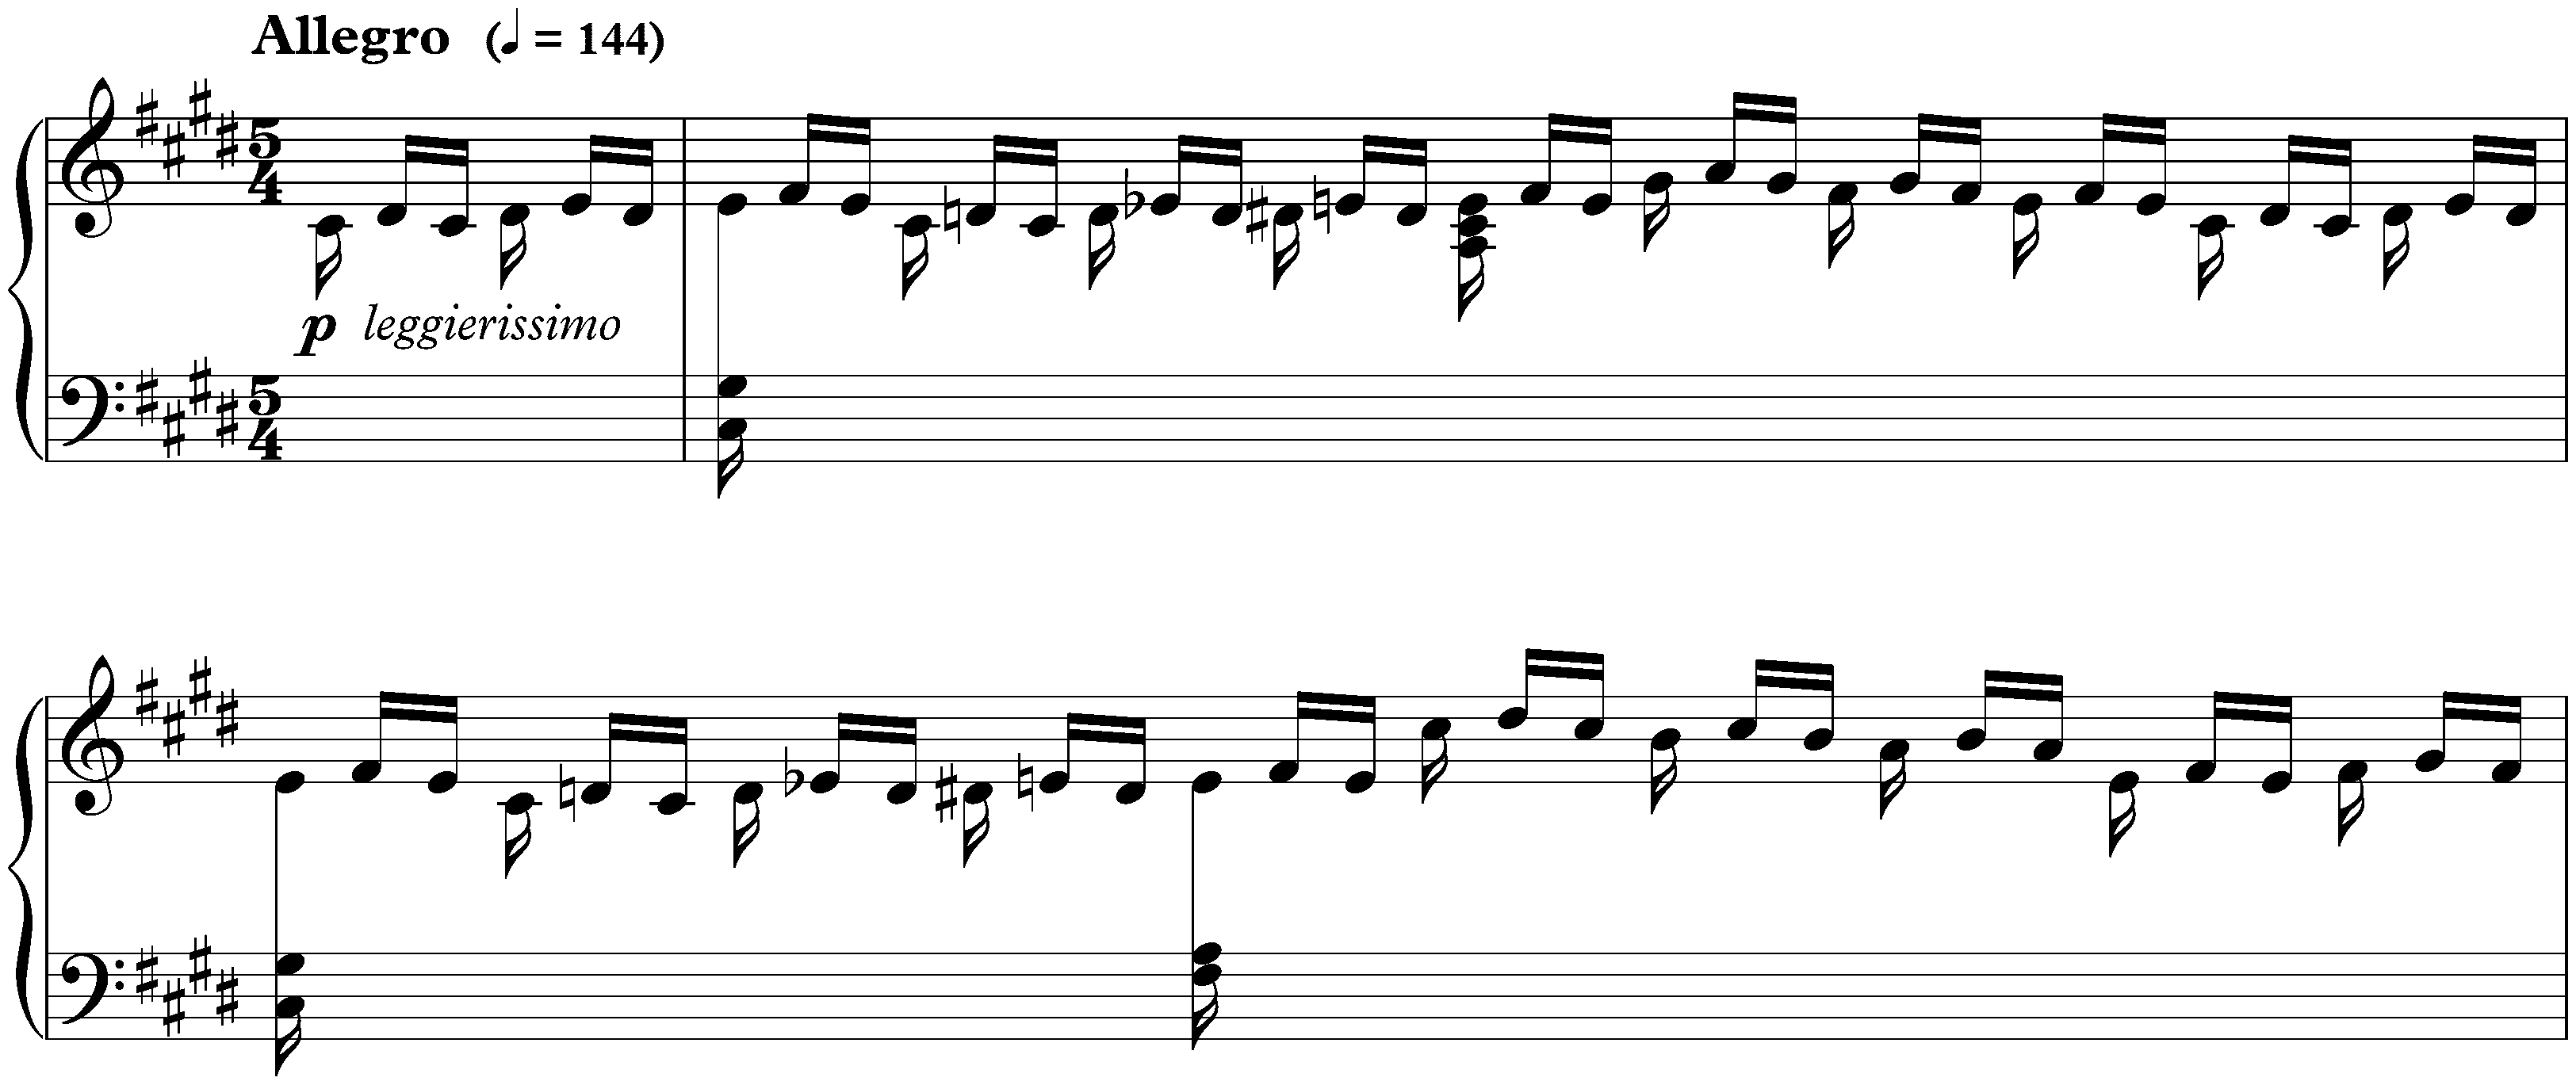 Neuf Préludes, op. 103; 2. C-sharp minor